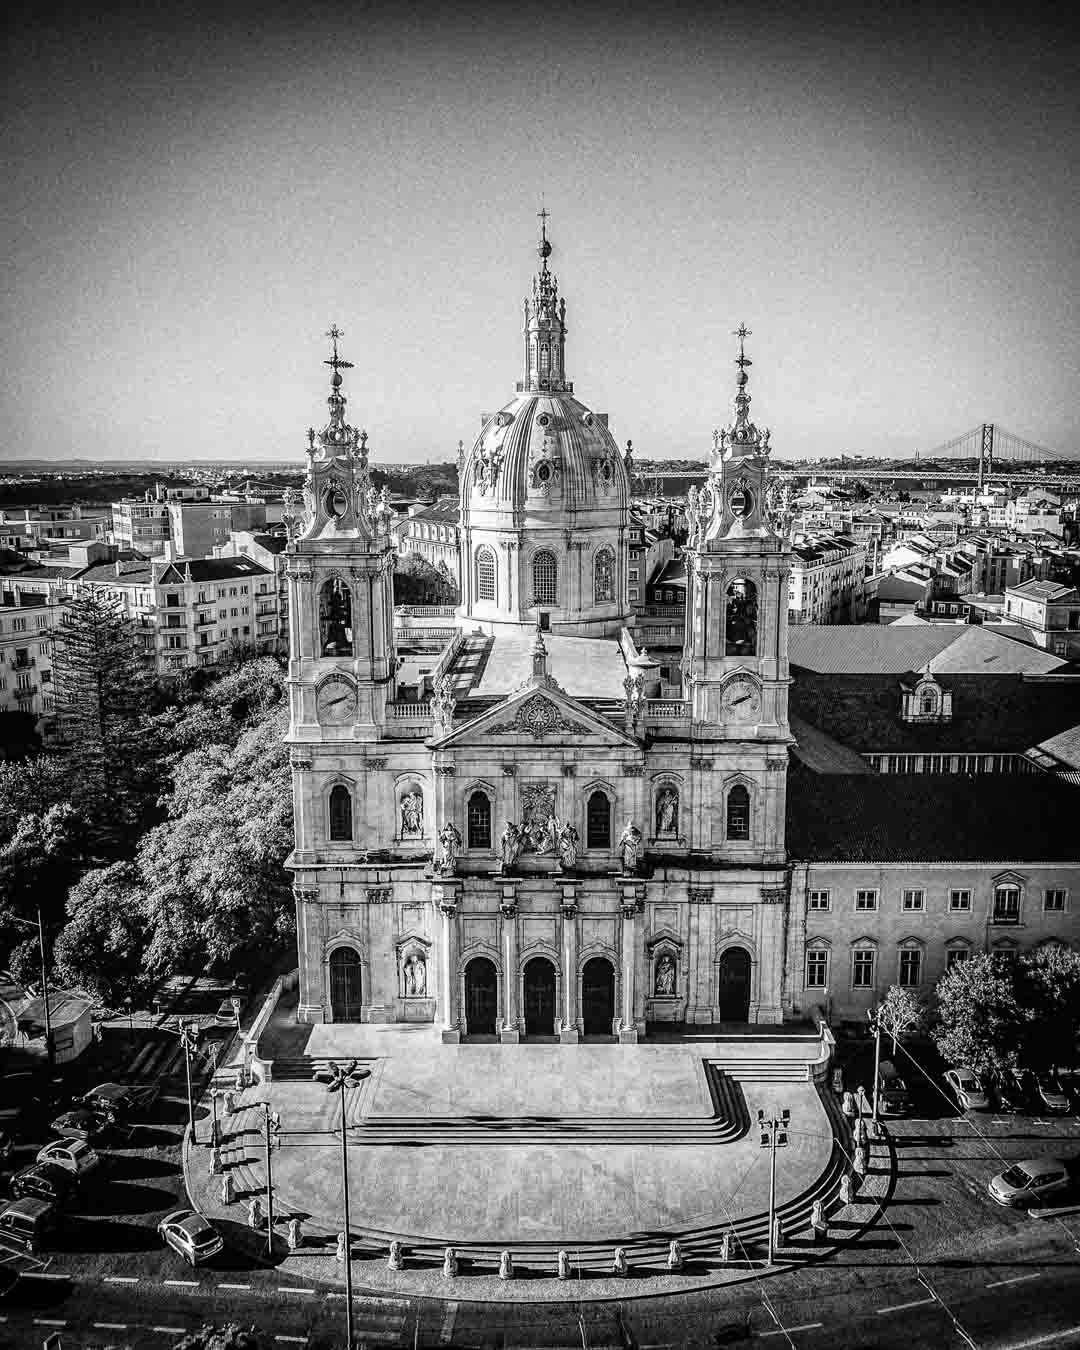 basilica da estrela in black and white